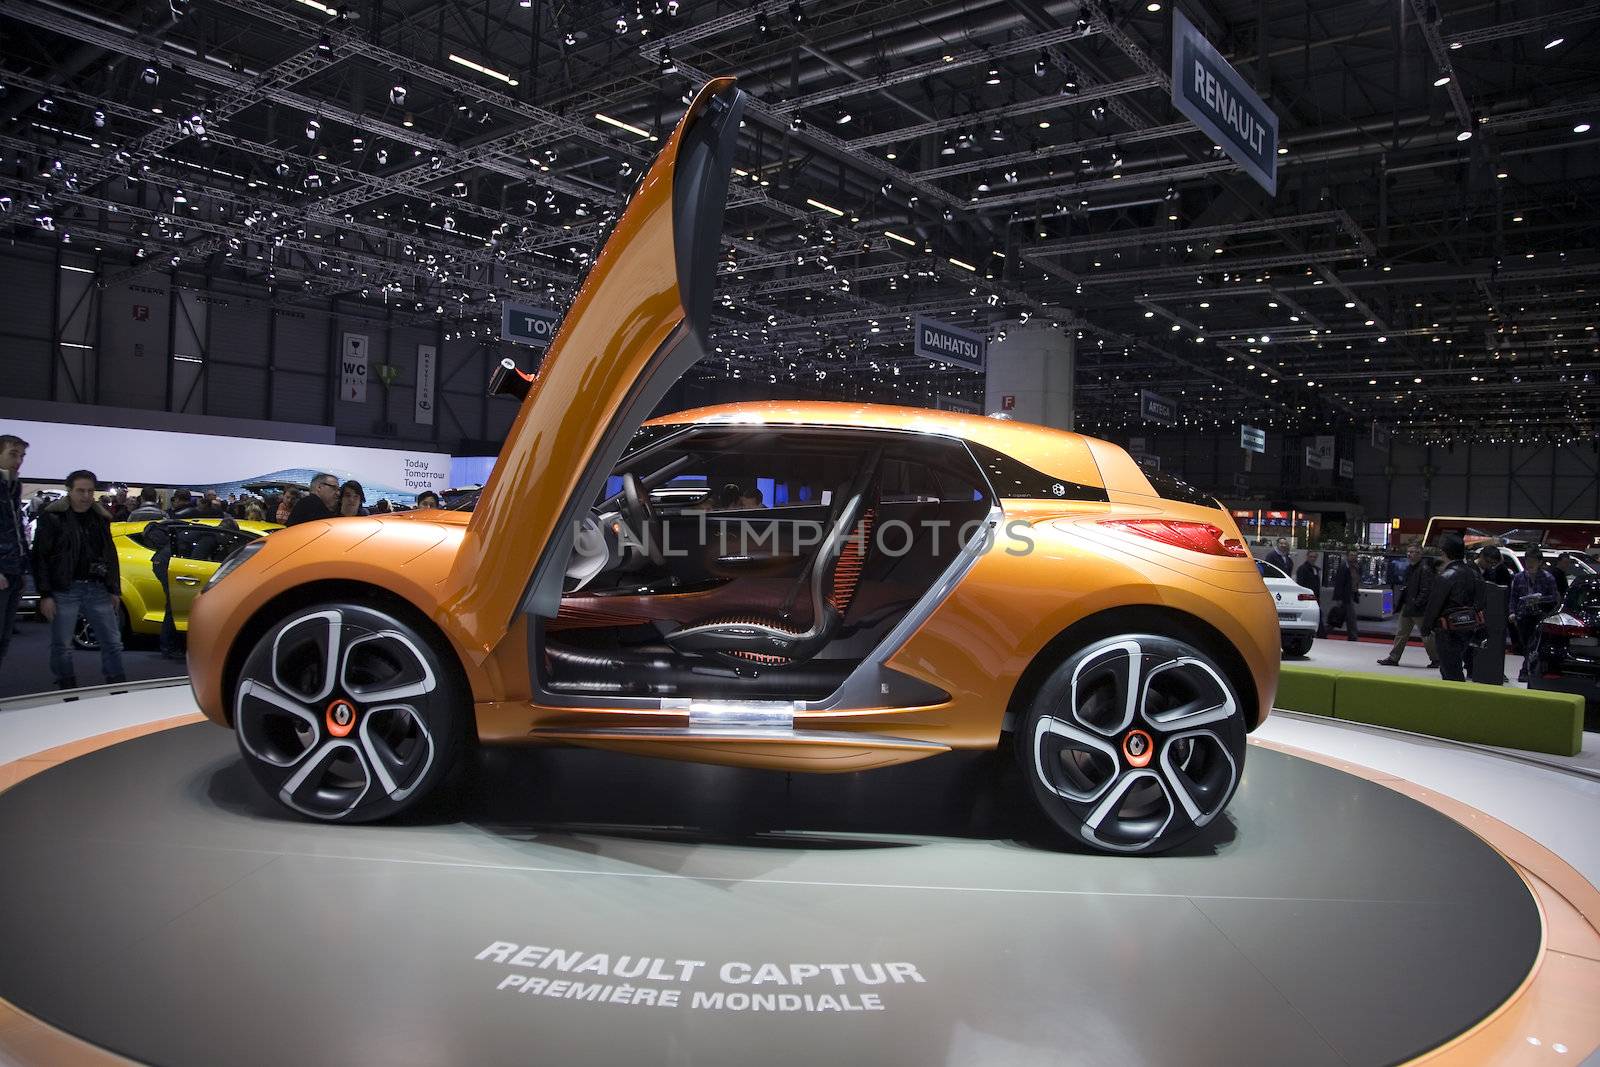 Renault Captur Concept car by shadow69